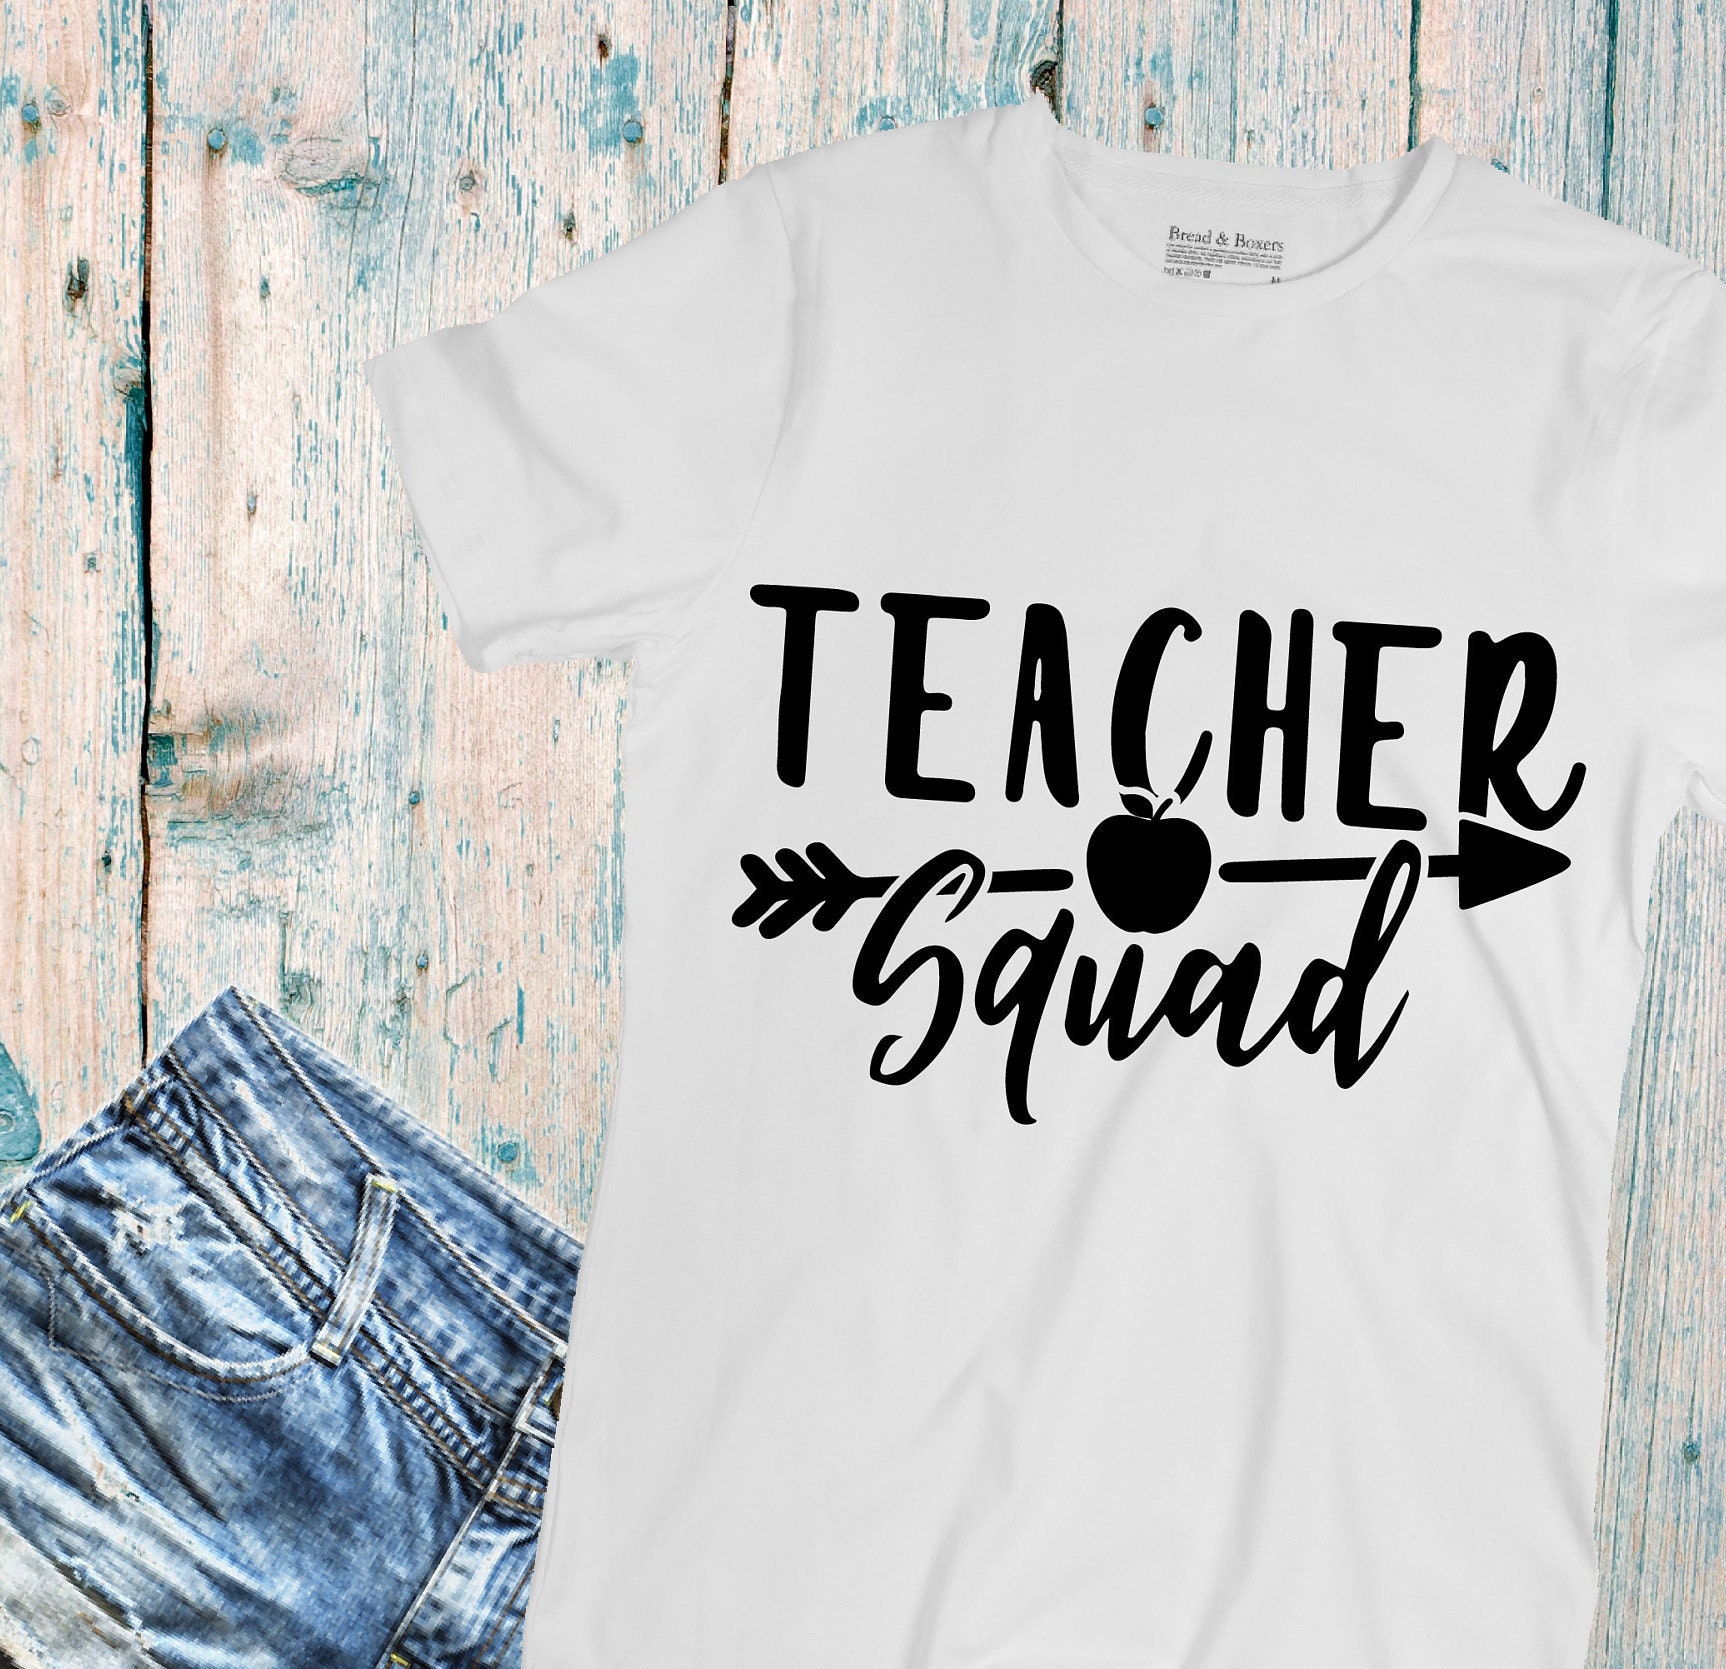 Teacher squad svg Teacher svg teacher shirt teacher gift ...